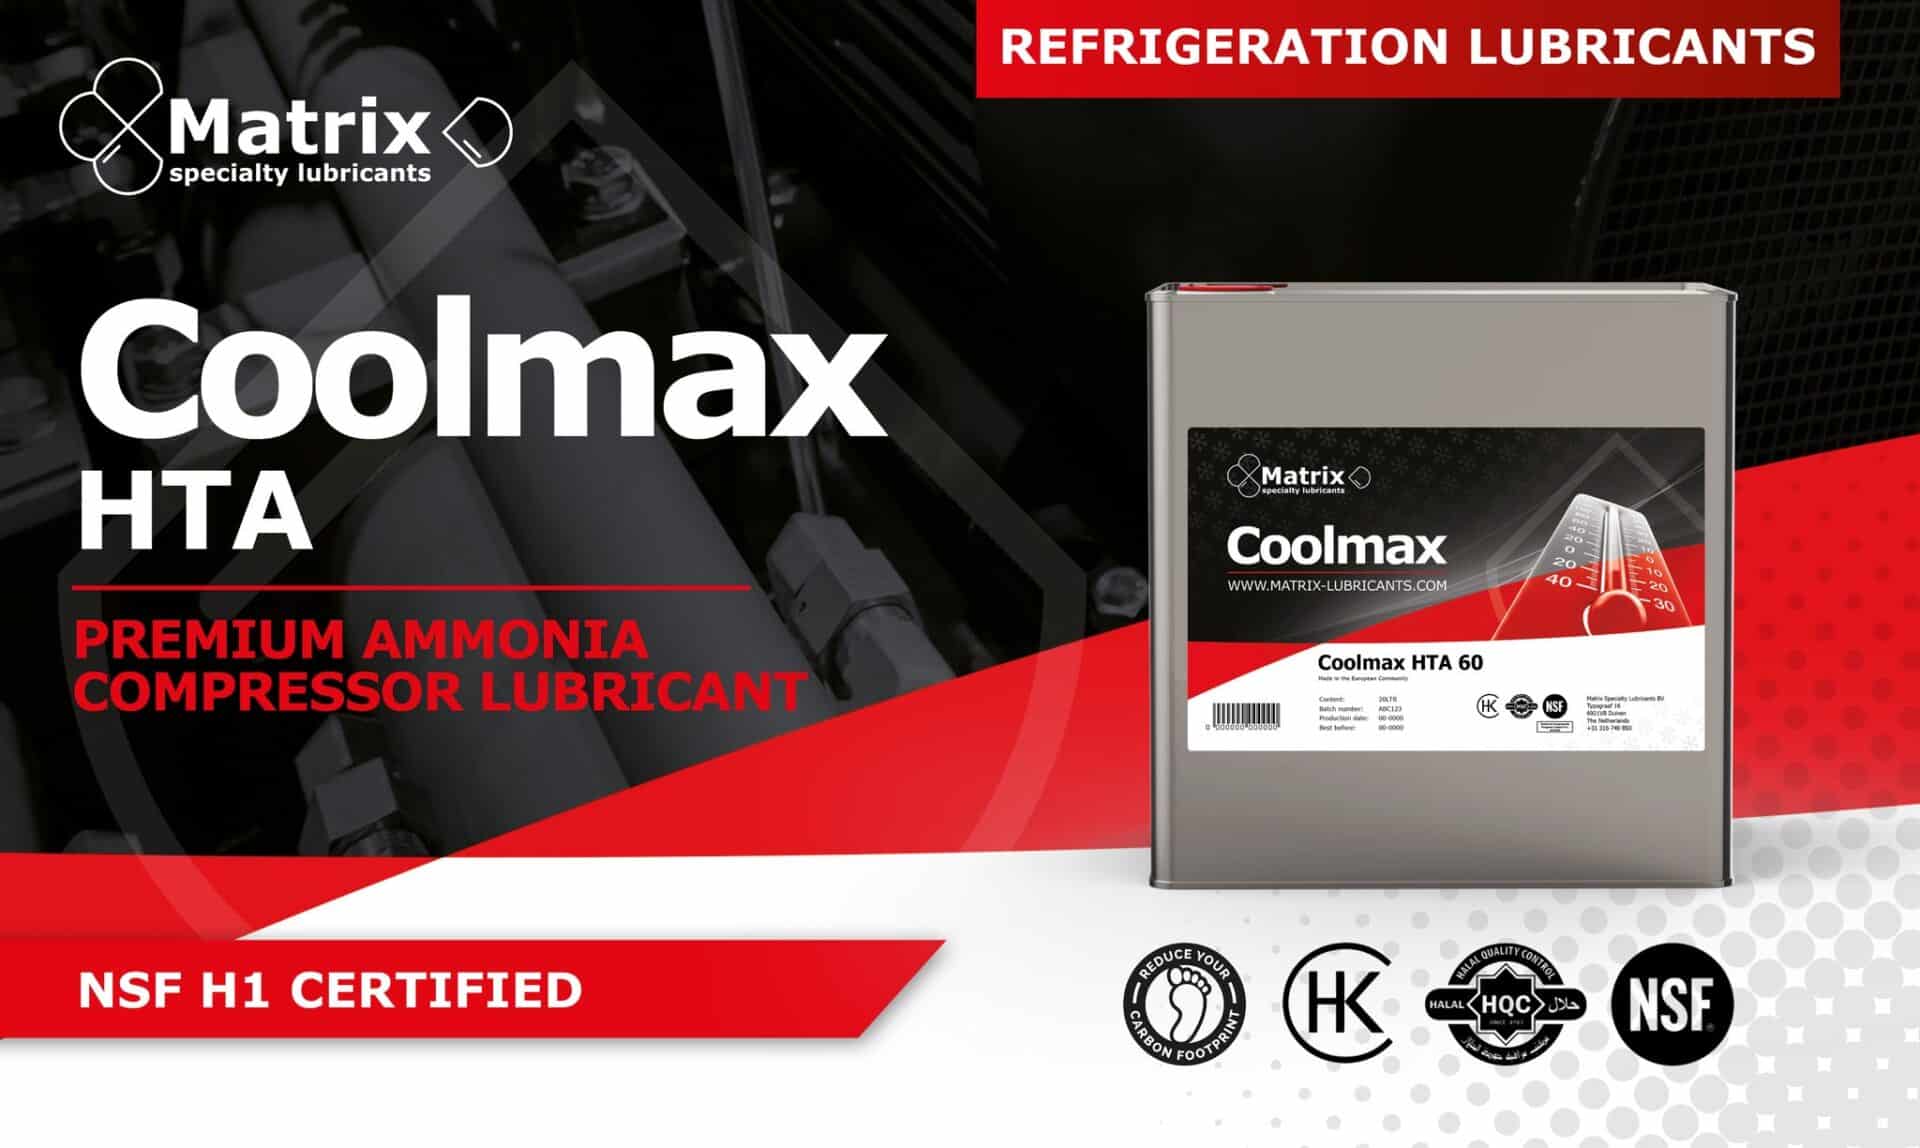 Matrix specialty lubricants' Coolmax HTA premium ammonia compressor lubricant